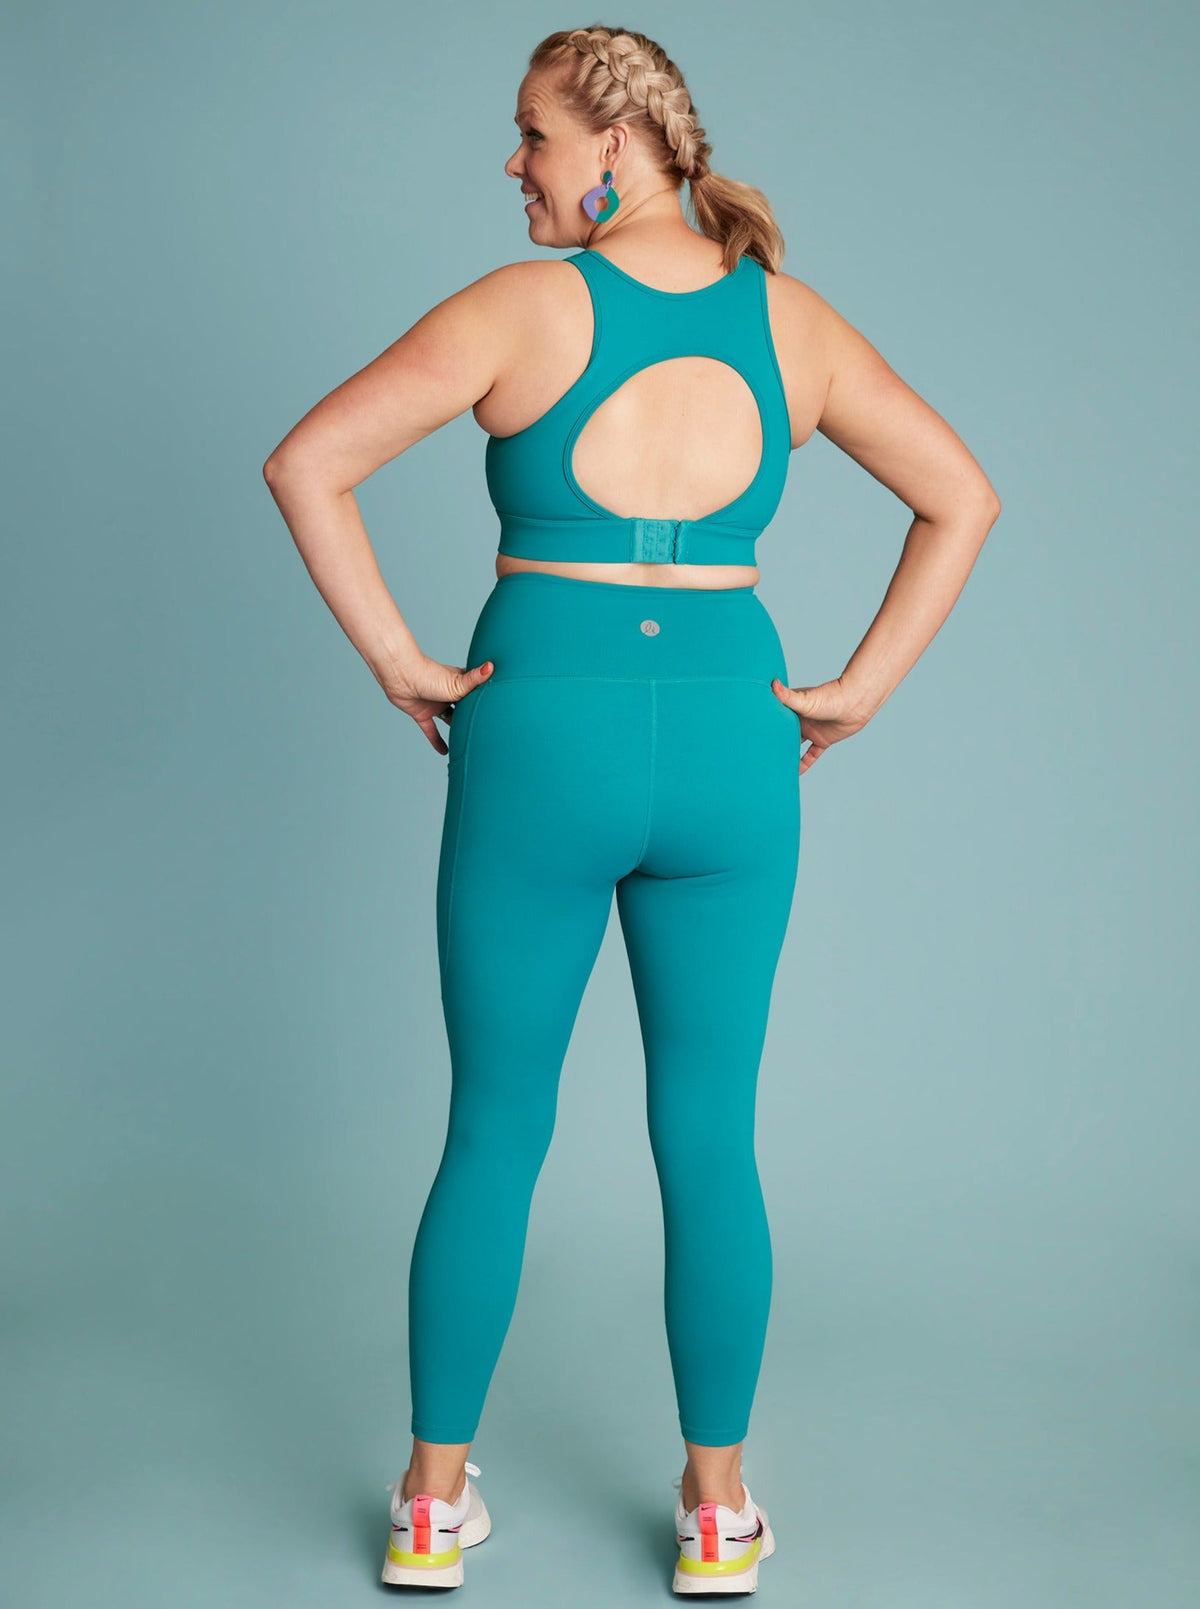 Forest Green Everyday Legging - 7/8 length - squat proof gym leggings tall women